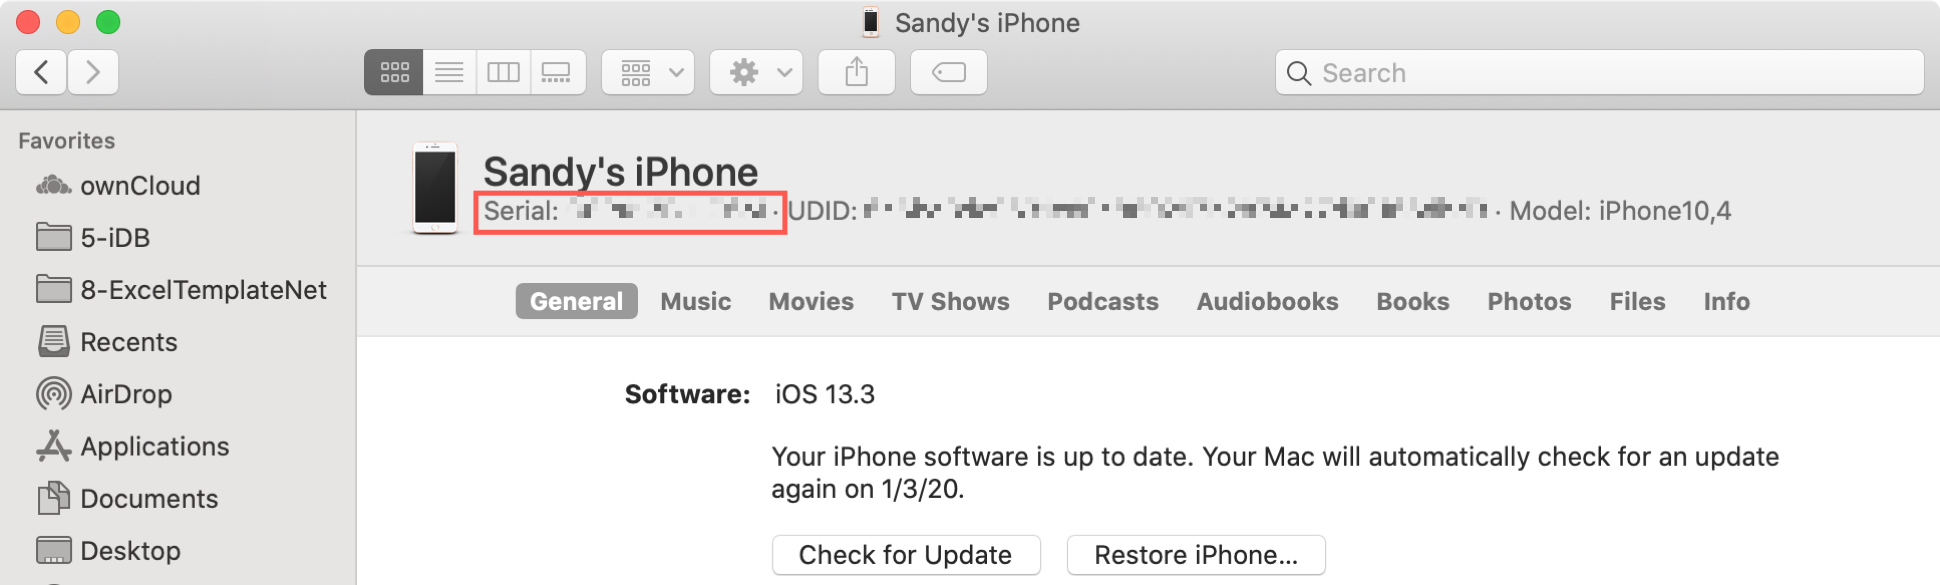 iPhone serial number Finder